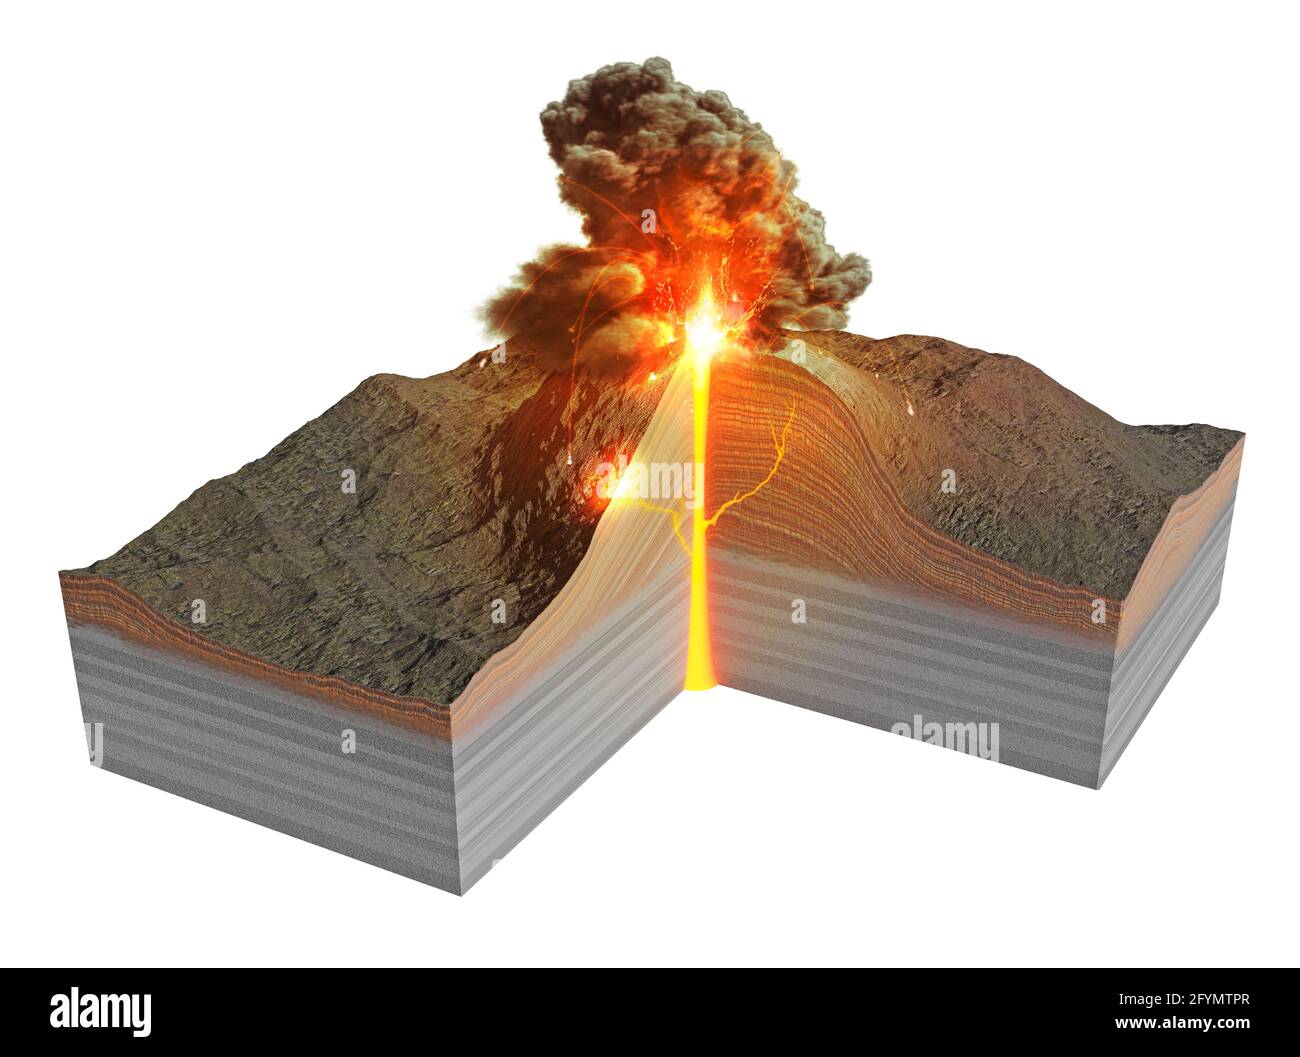 Erupting volcano, illustration Stock Photo